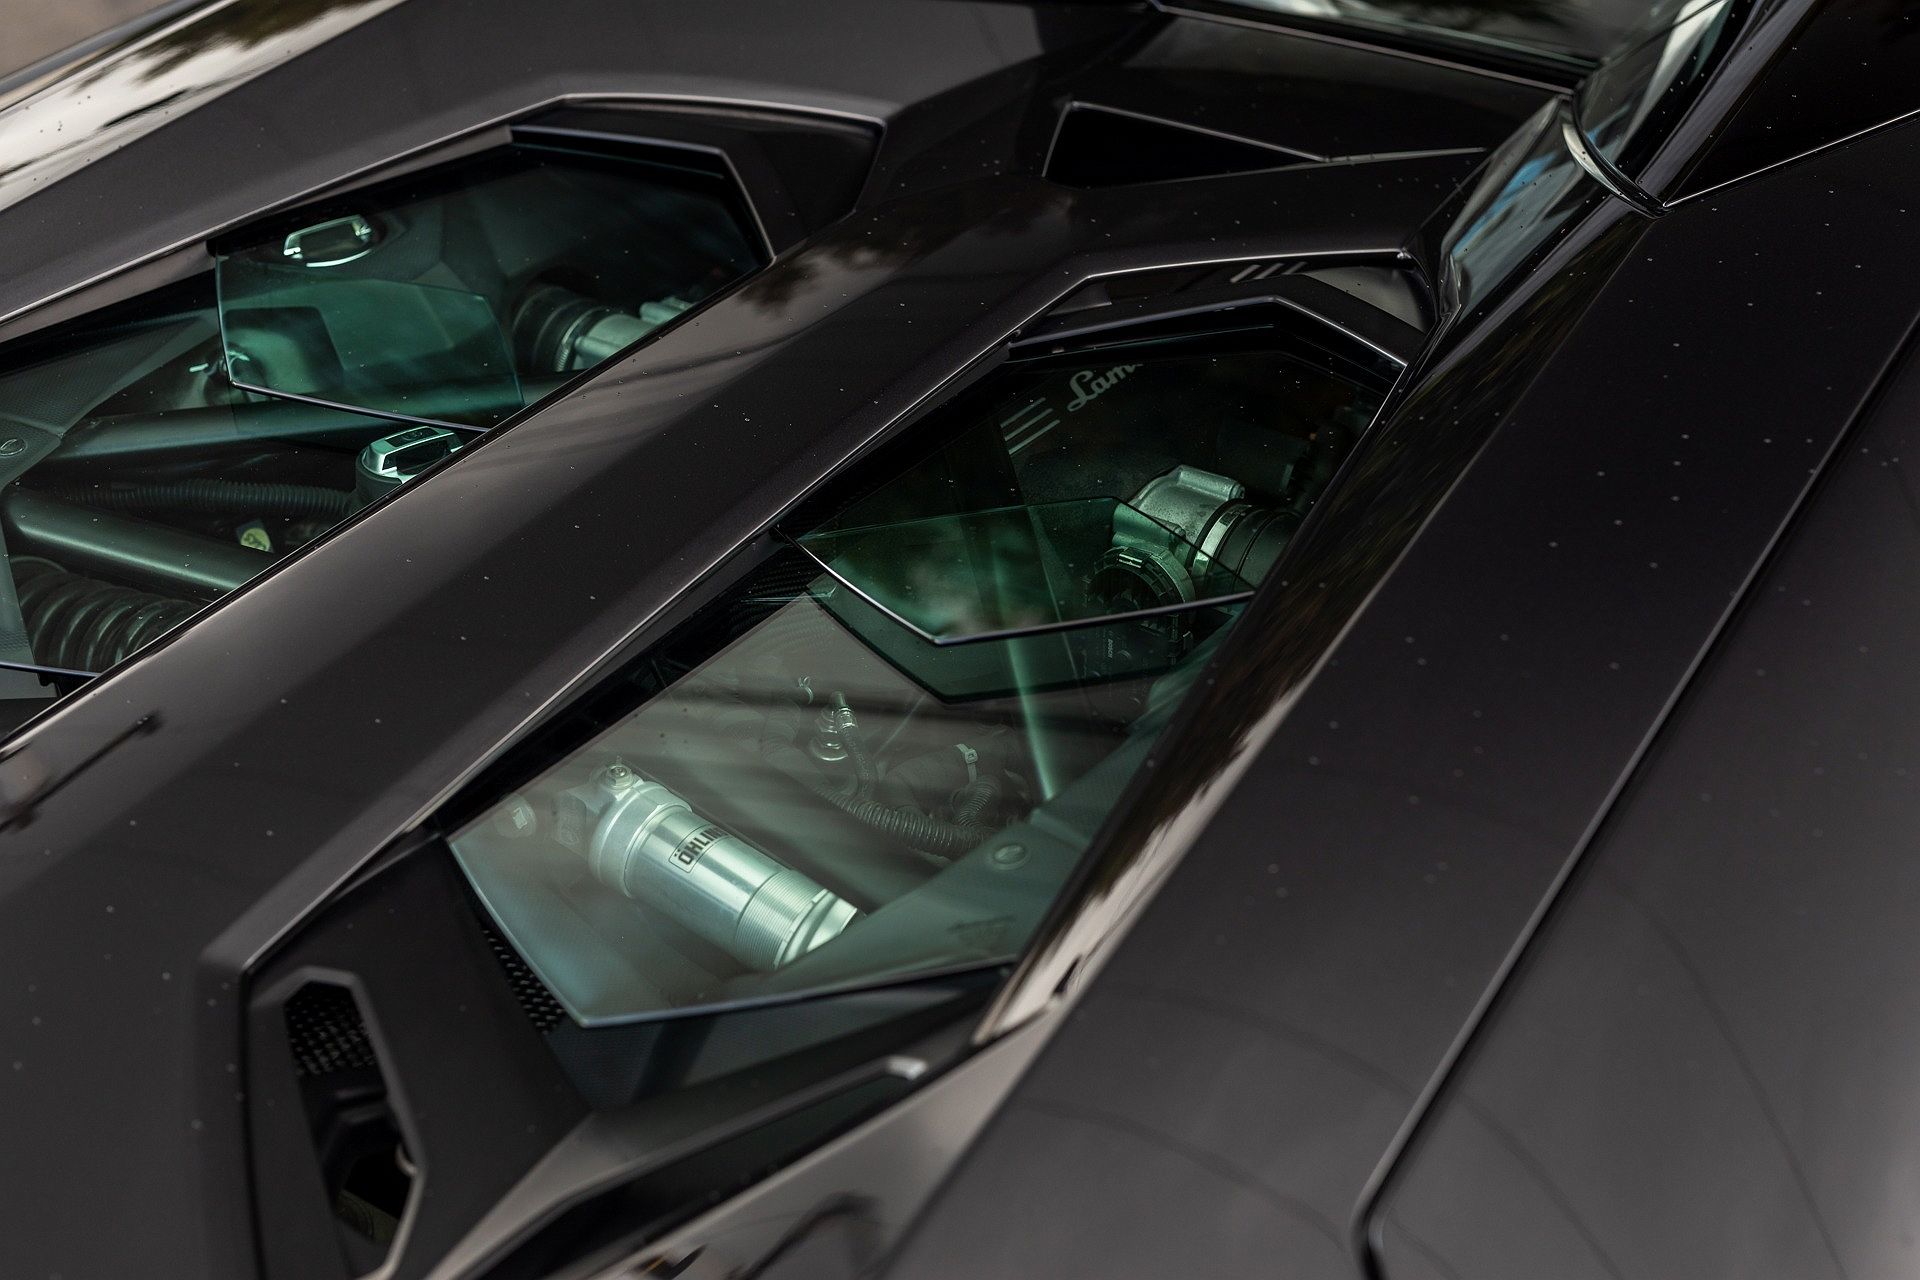 2014 Lamborghini Aventador LP700 image 29